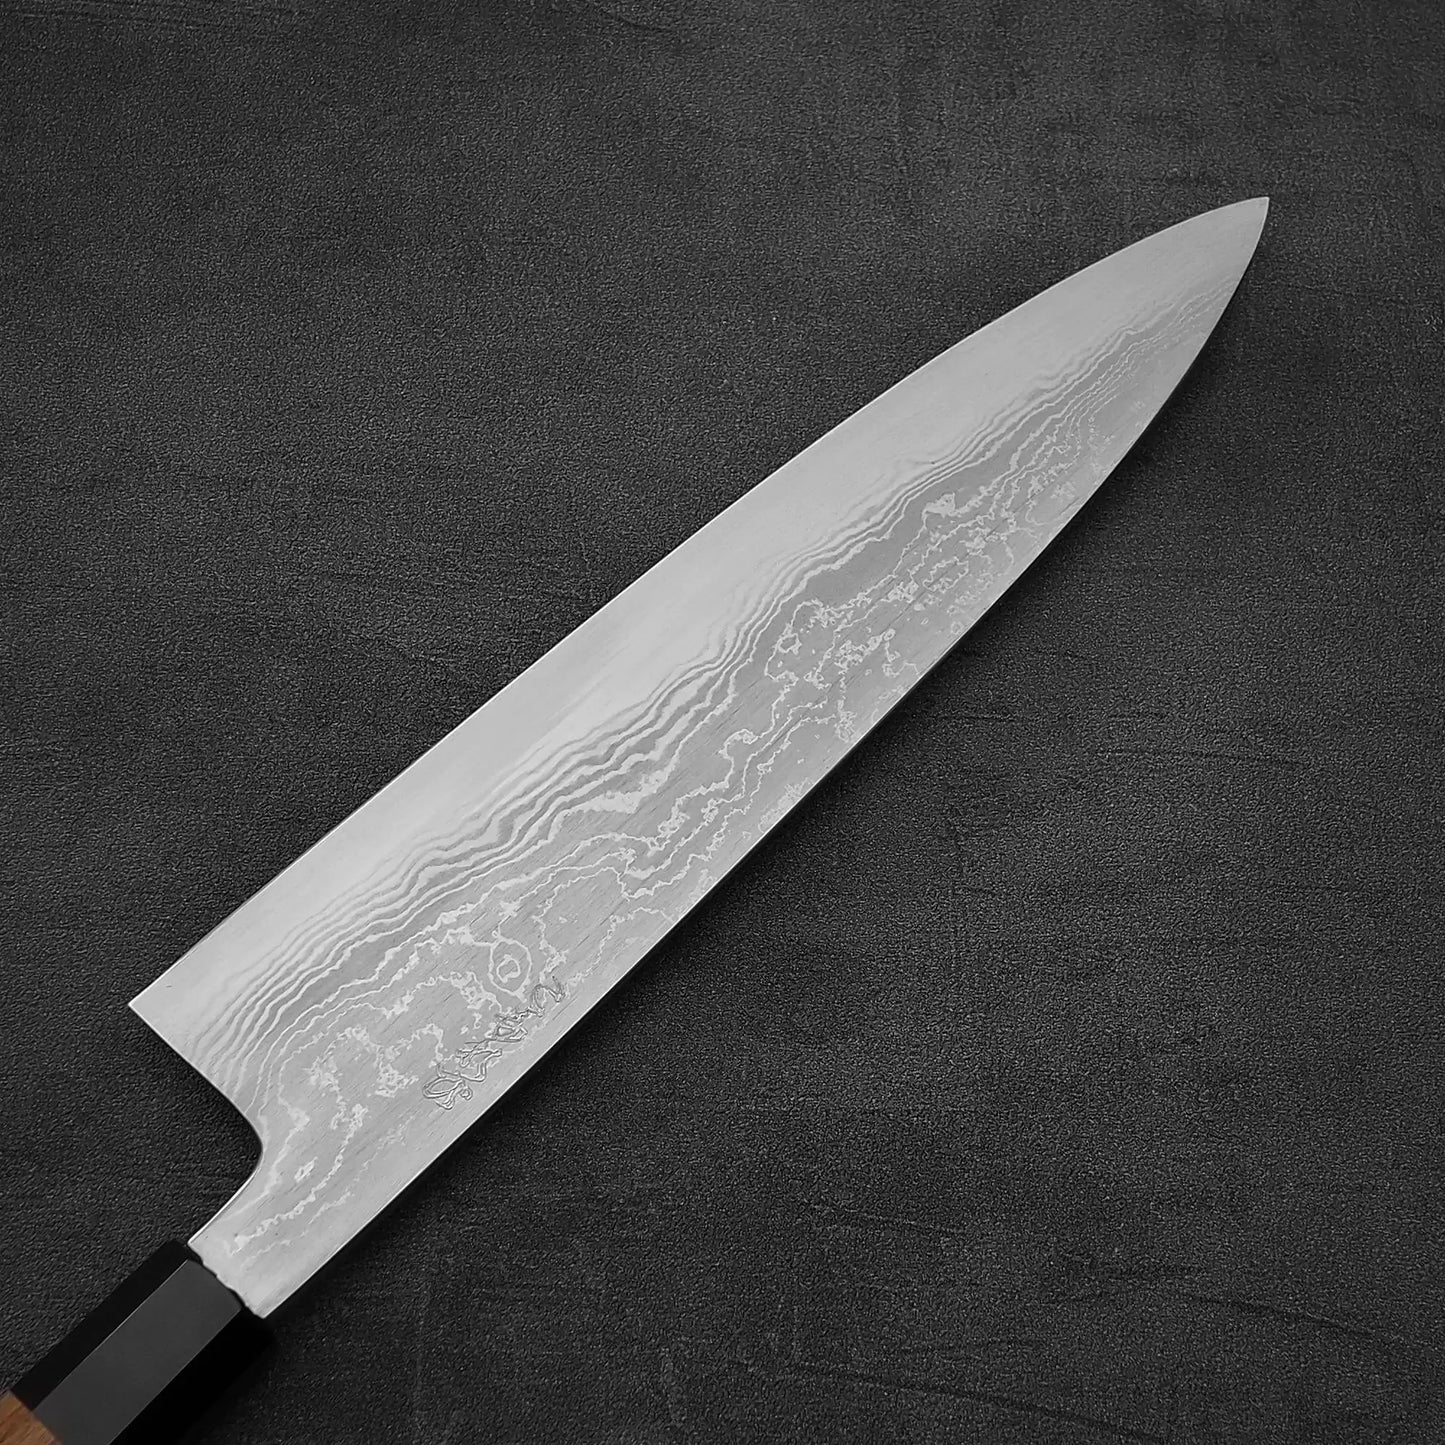 Close up view of Hatsukokoro Komorebi damascus aogami#1 gyuto knife showing the back side of the blade